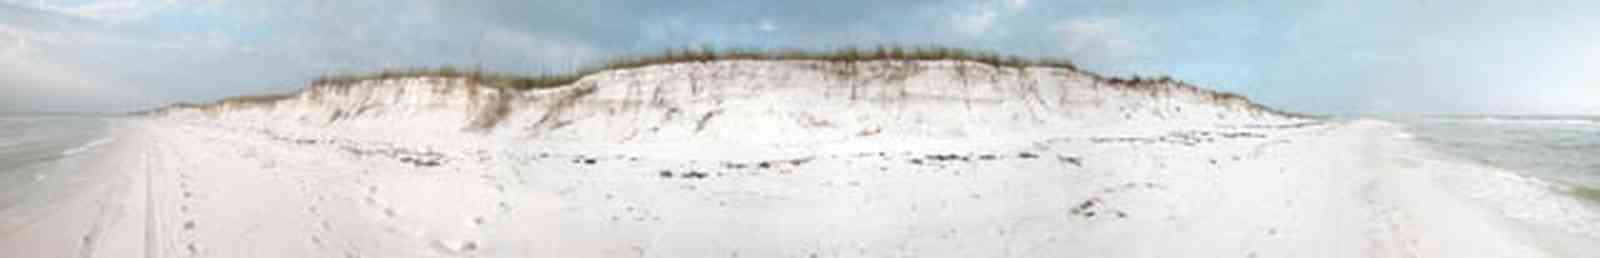 Gulf-Islands-National-Seashore:-Fort-Pickens:-Dunes_13-.jpg:  dunes, beachfront, sand, surf, waves, island